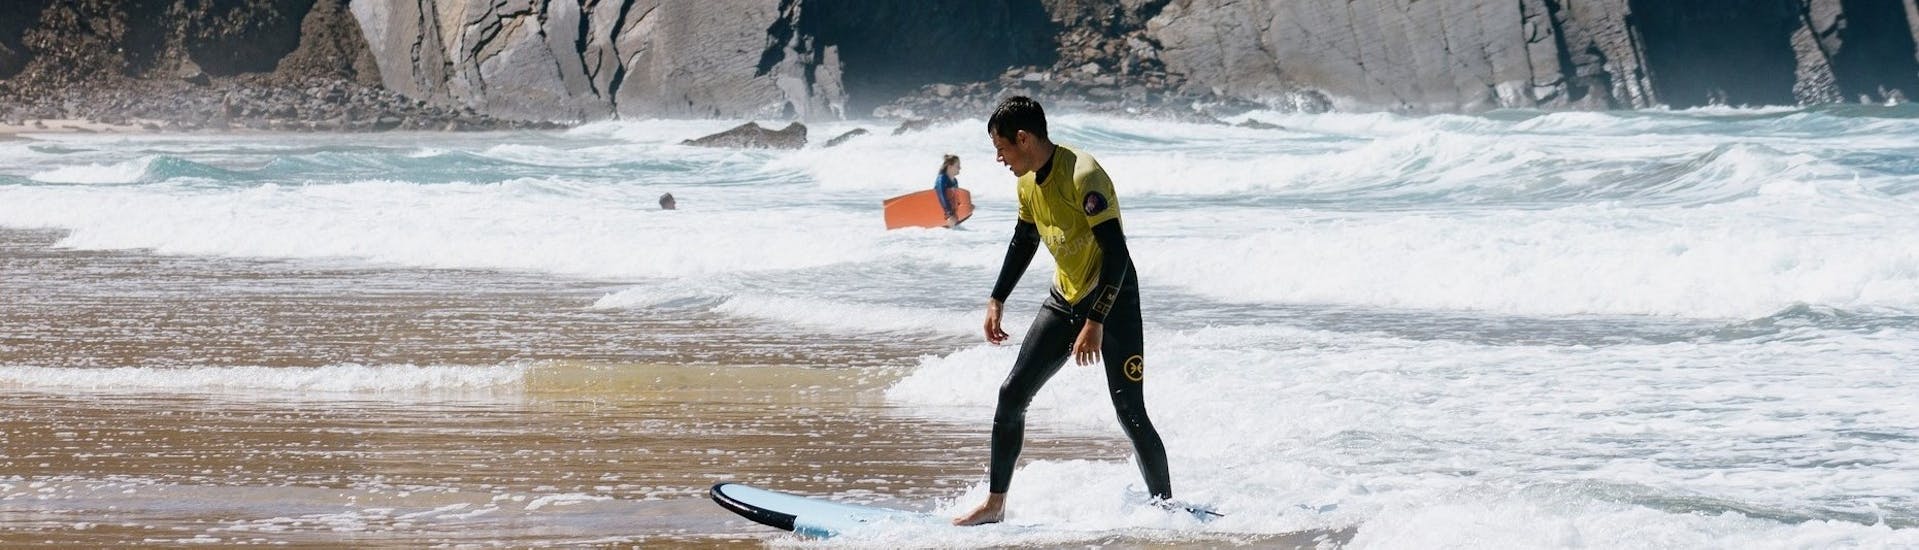 Lezioni private di surf a Portimão da 6 anni per principianti.